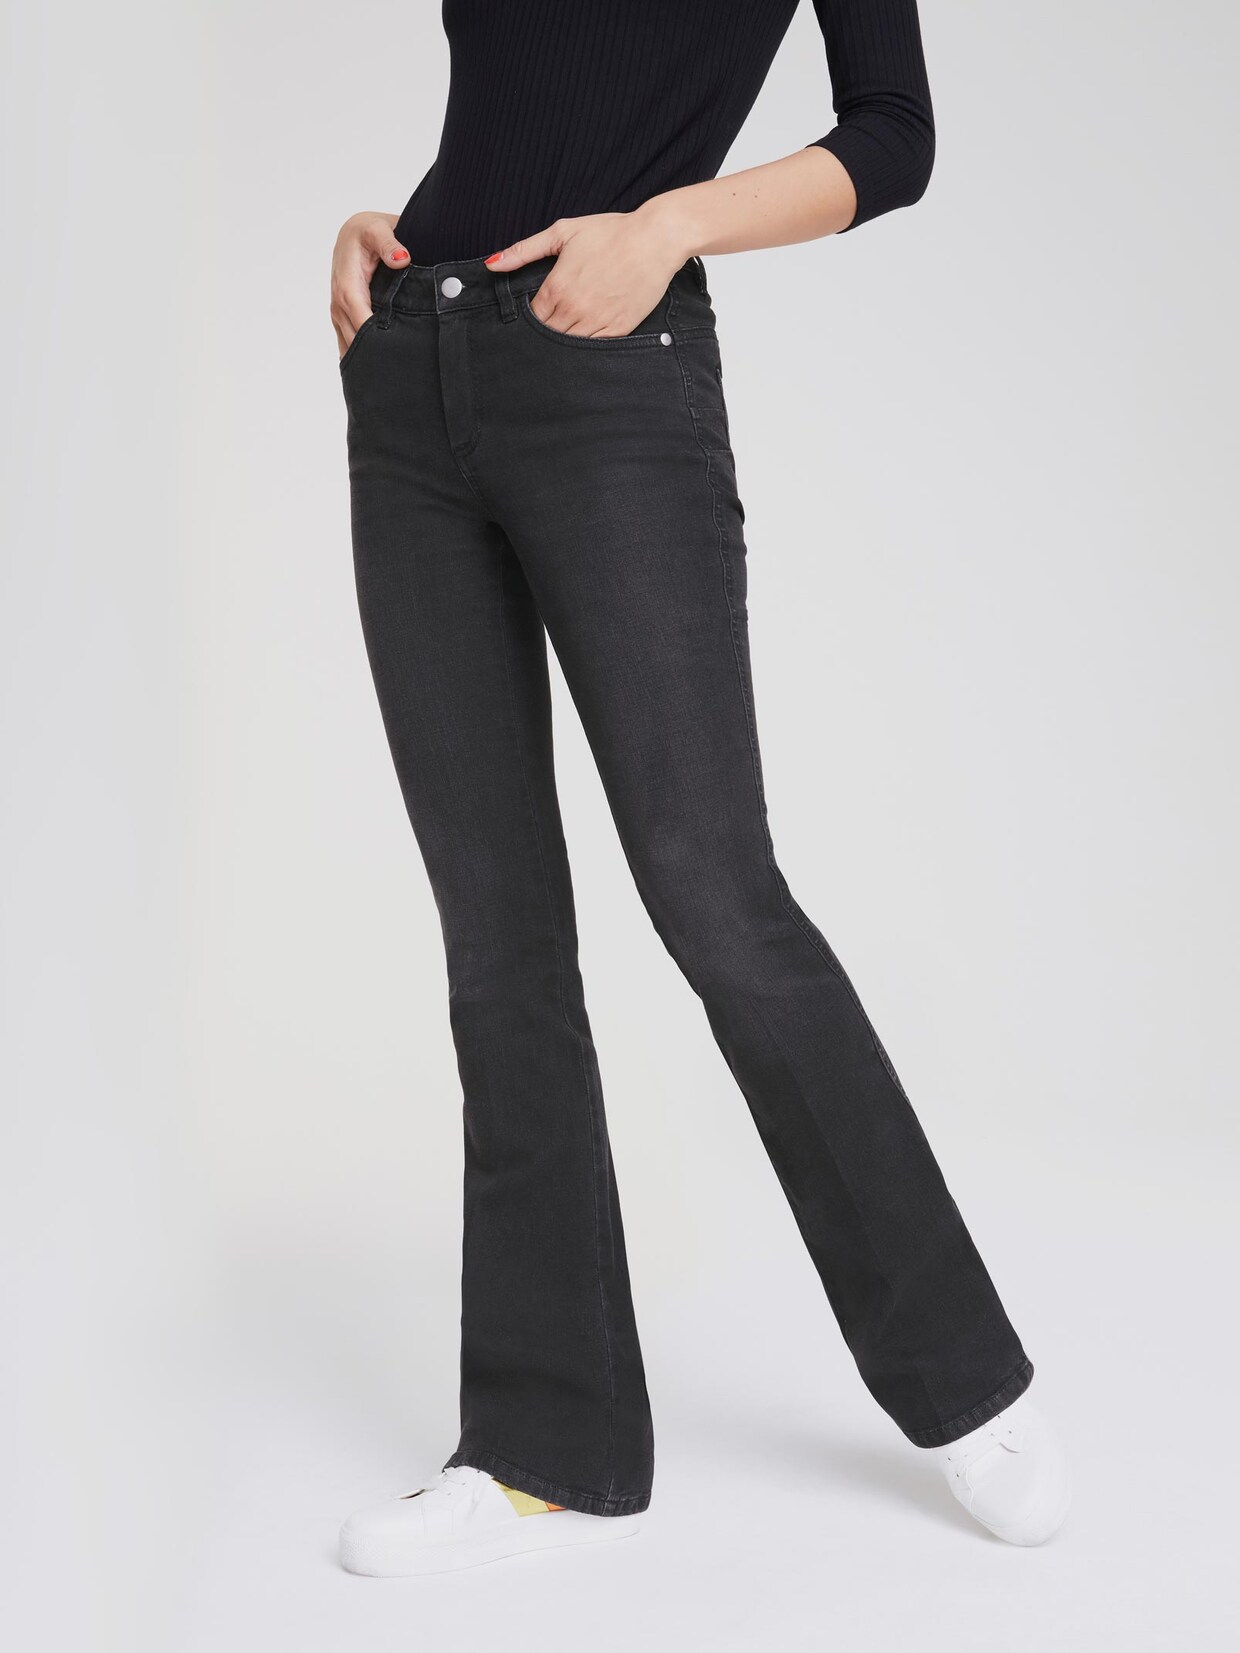 Rick Cardona 'Buik weg'-jeans - black denim